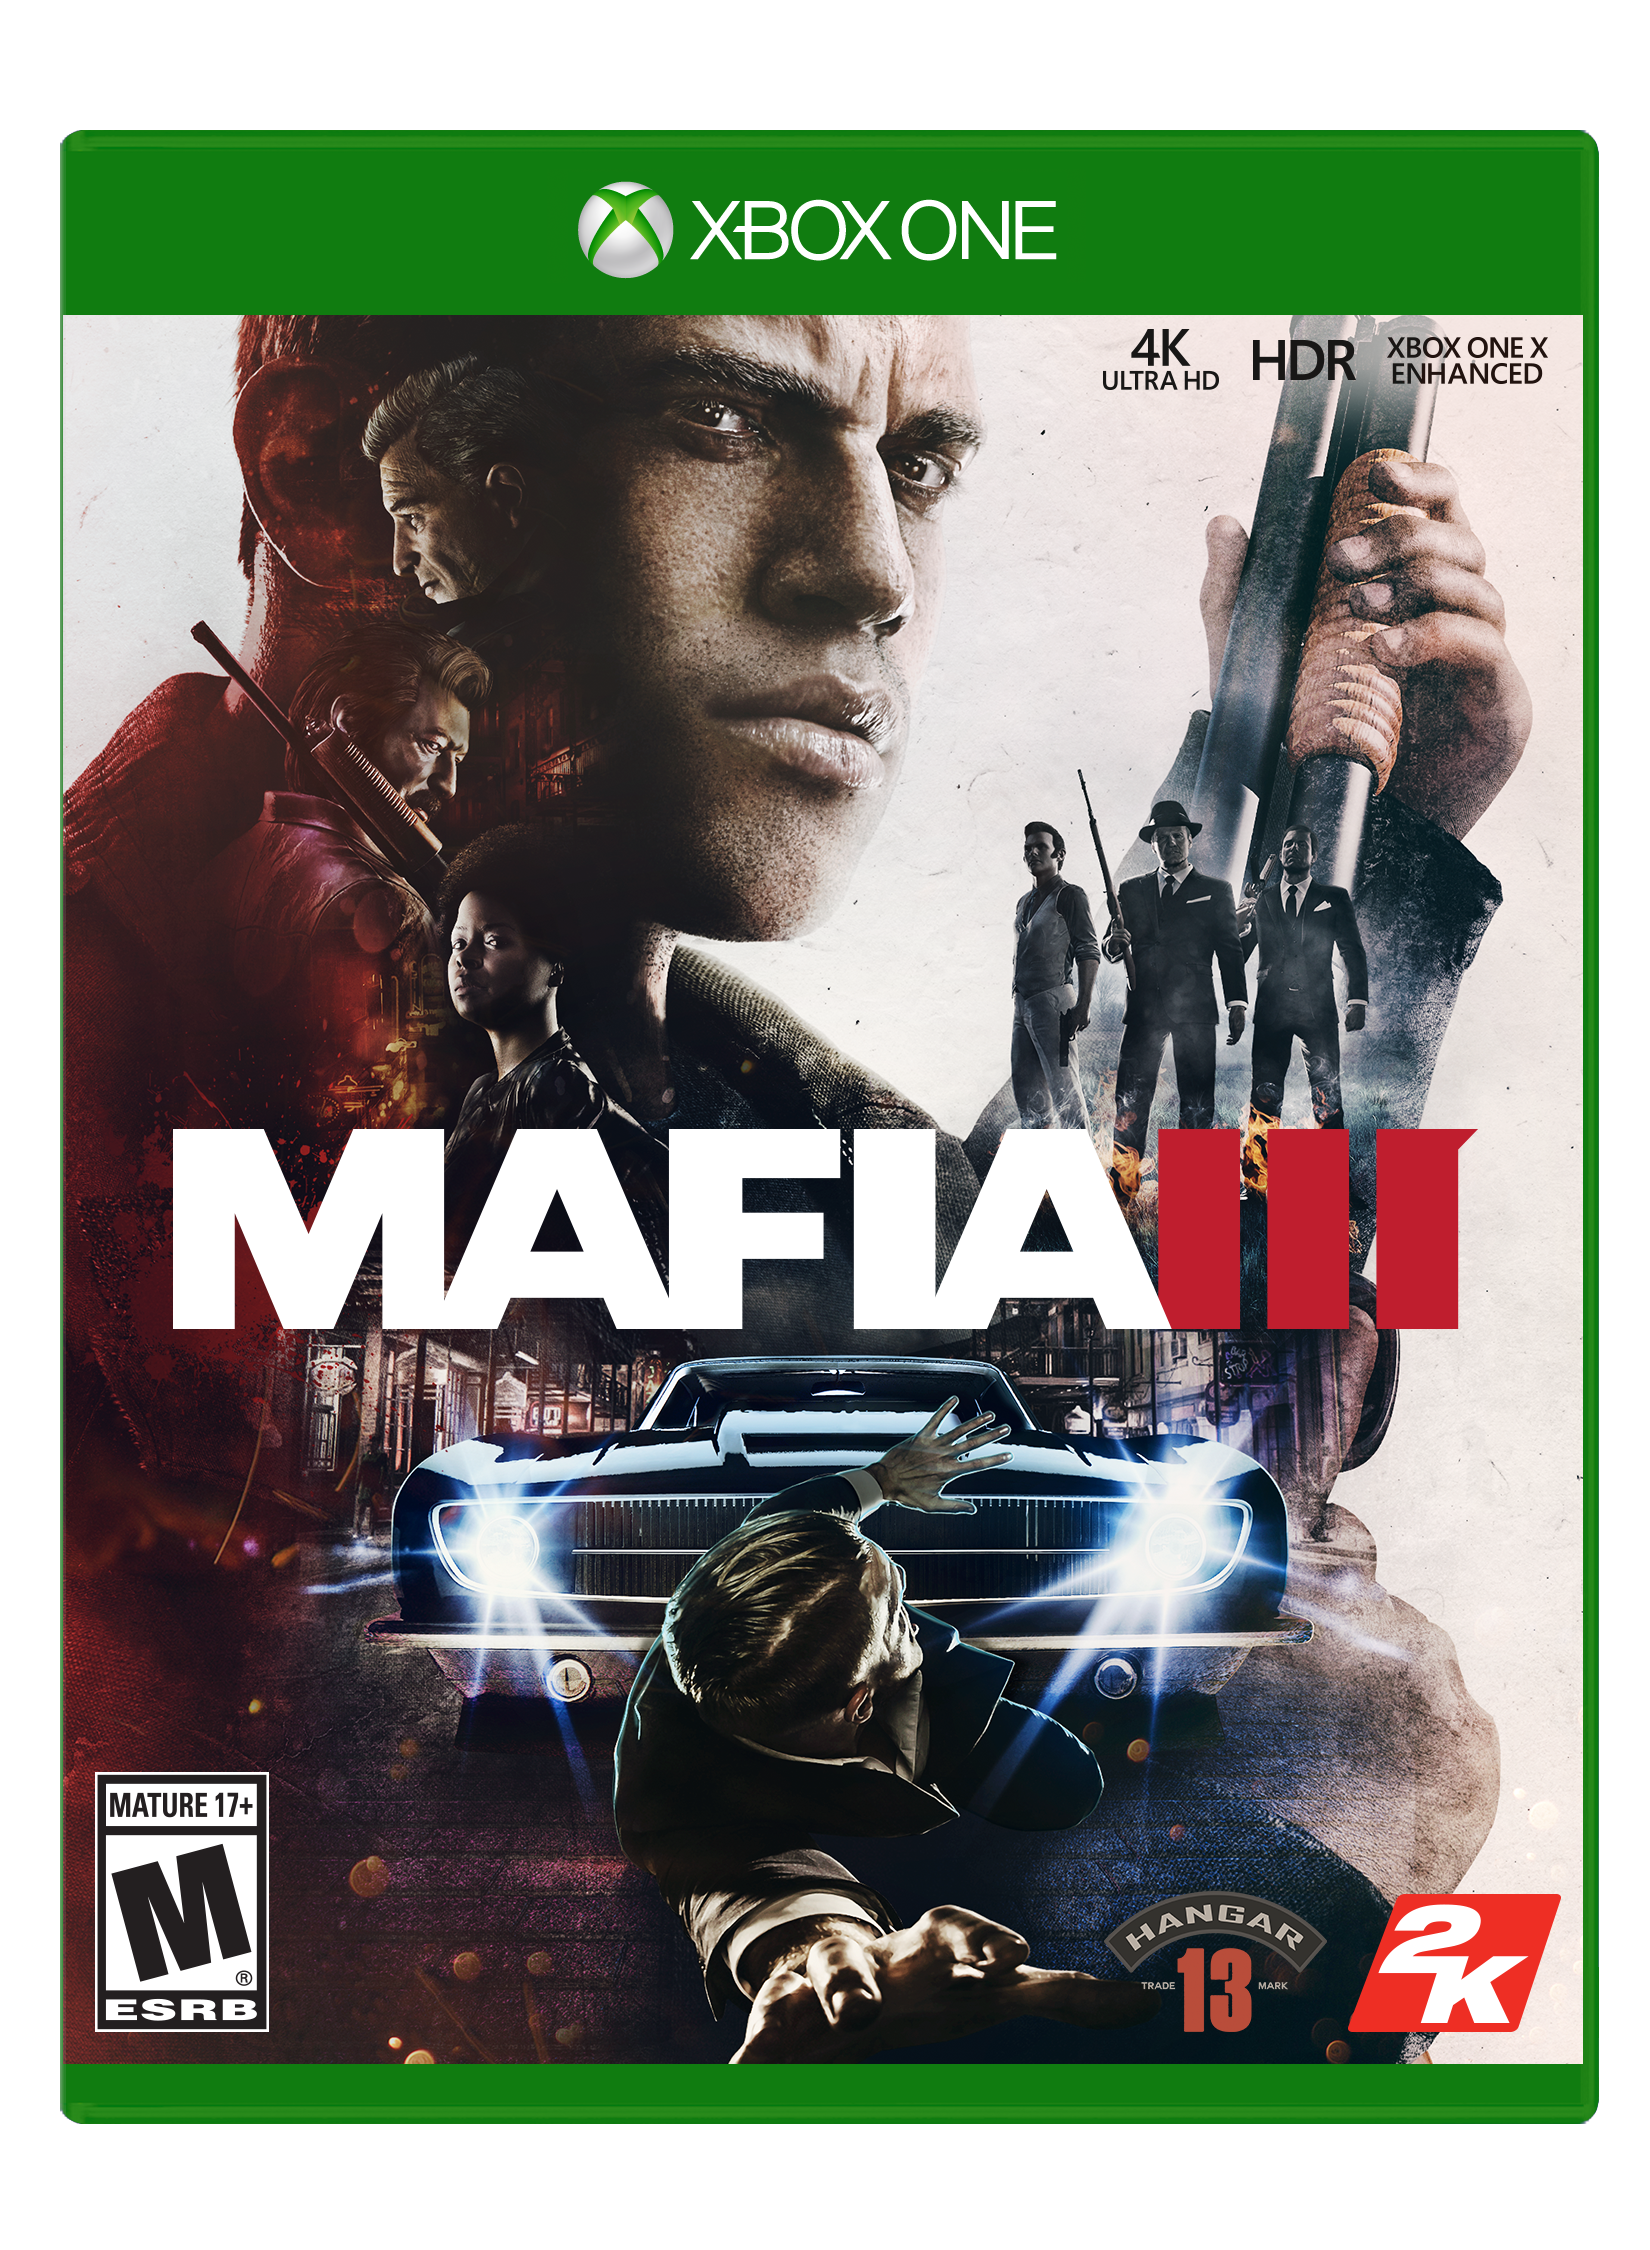 Mafia III Story DLC Is Now Free for Everyone